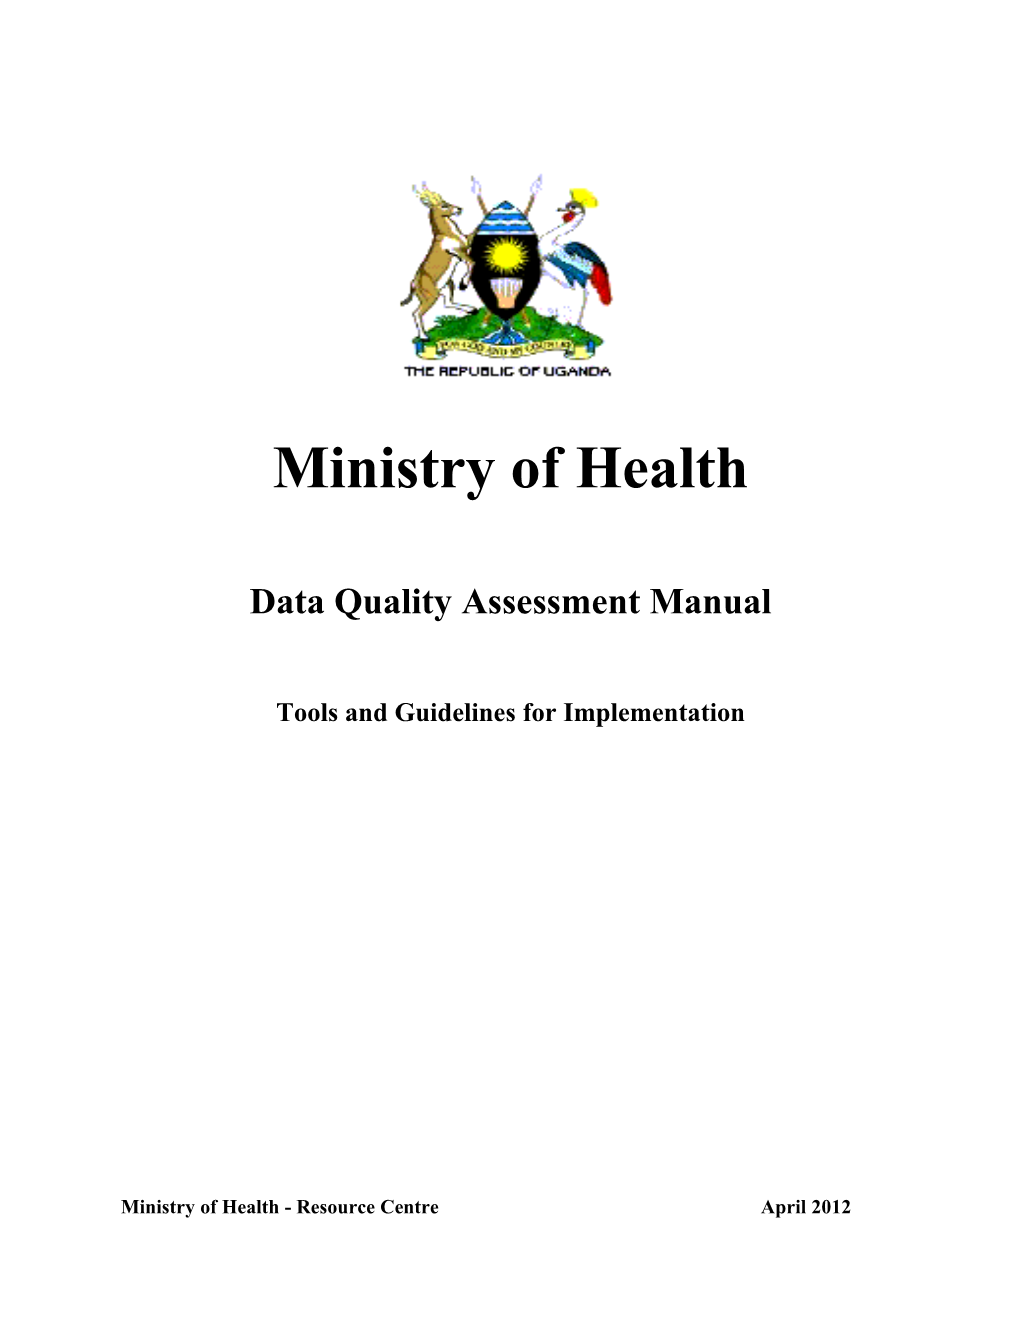 Data Quality Assessment Manual